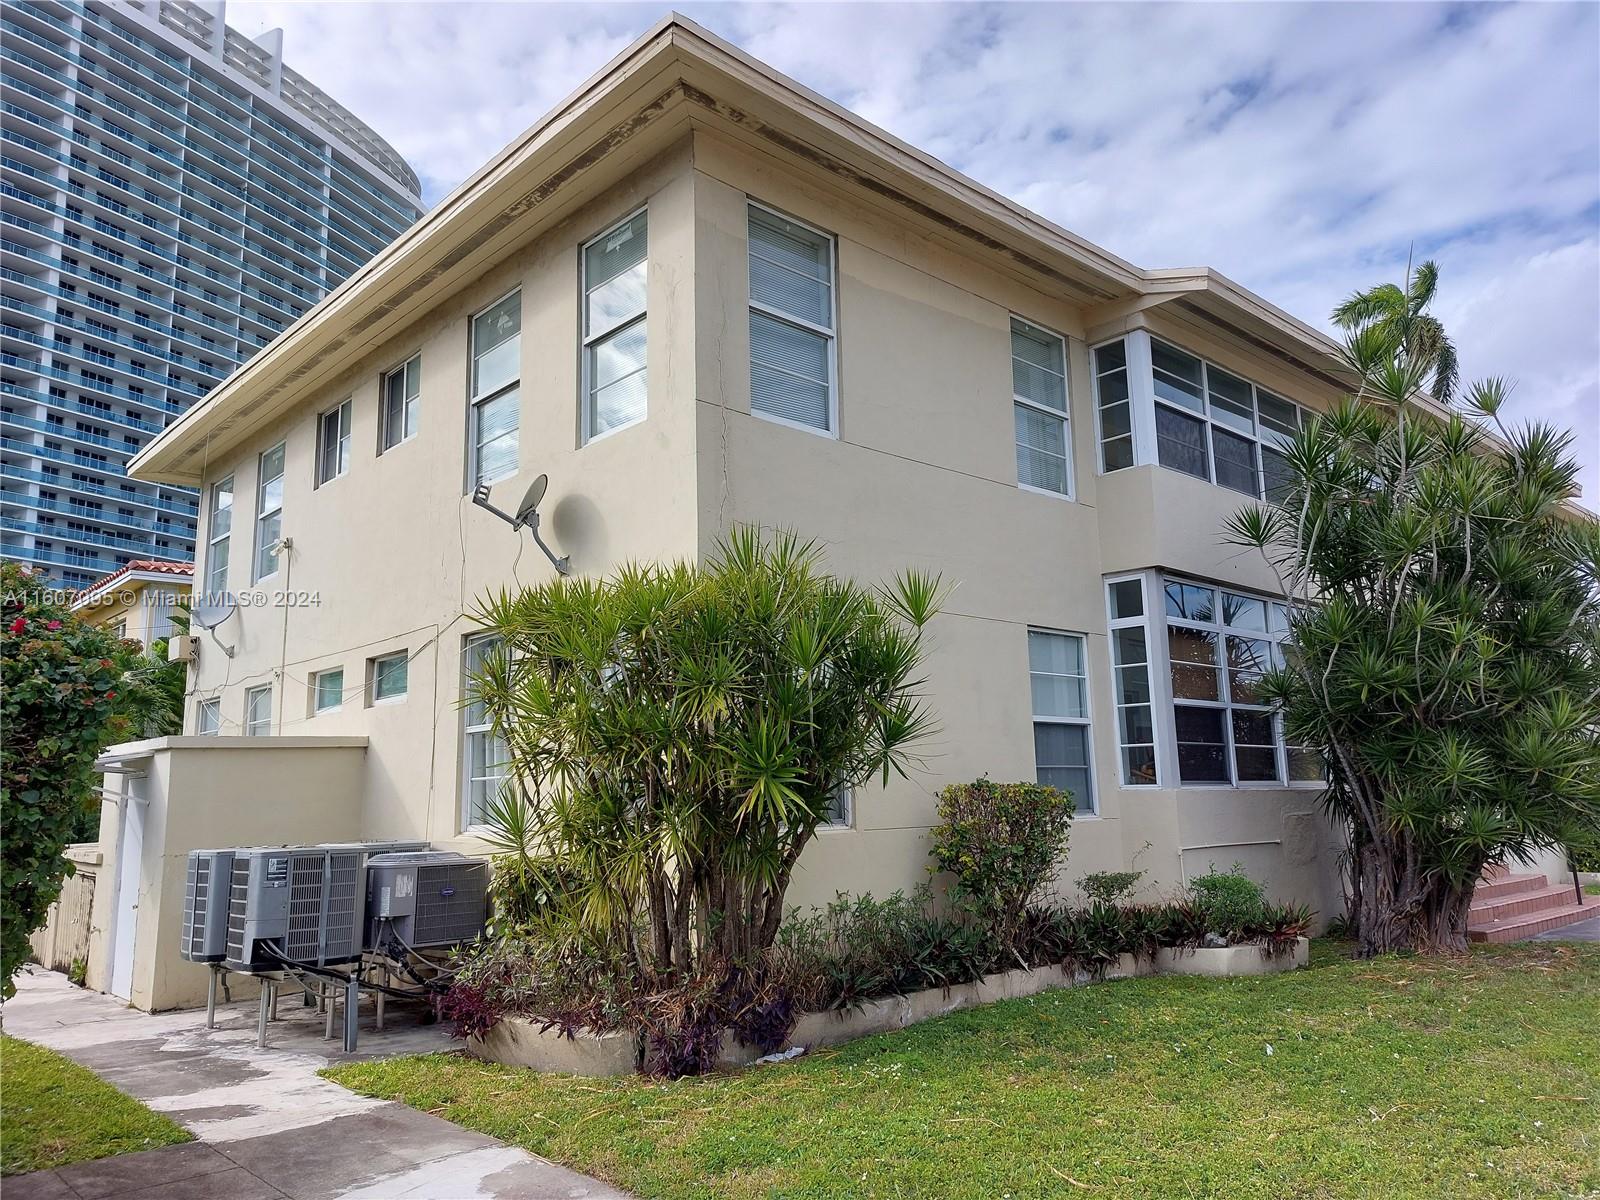 Rental Property at 1460 West Ave, Miami Beach, Miami-Dade County, Florida -  - $1,850,000 MO.